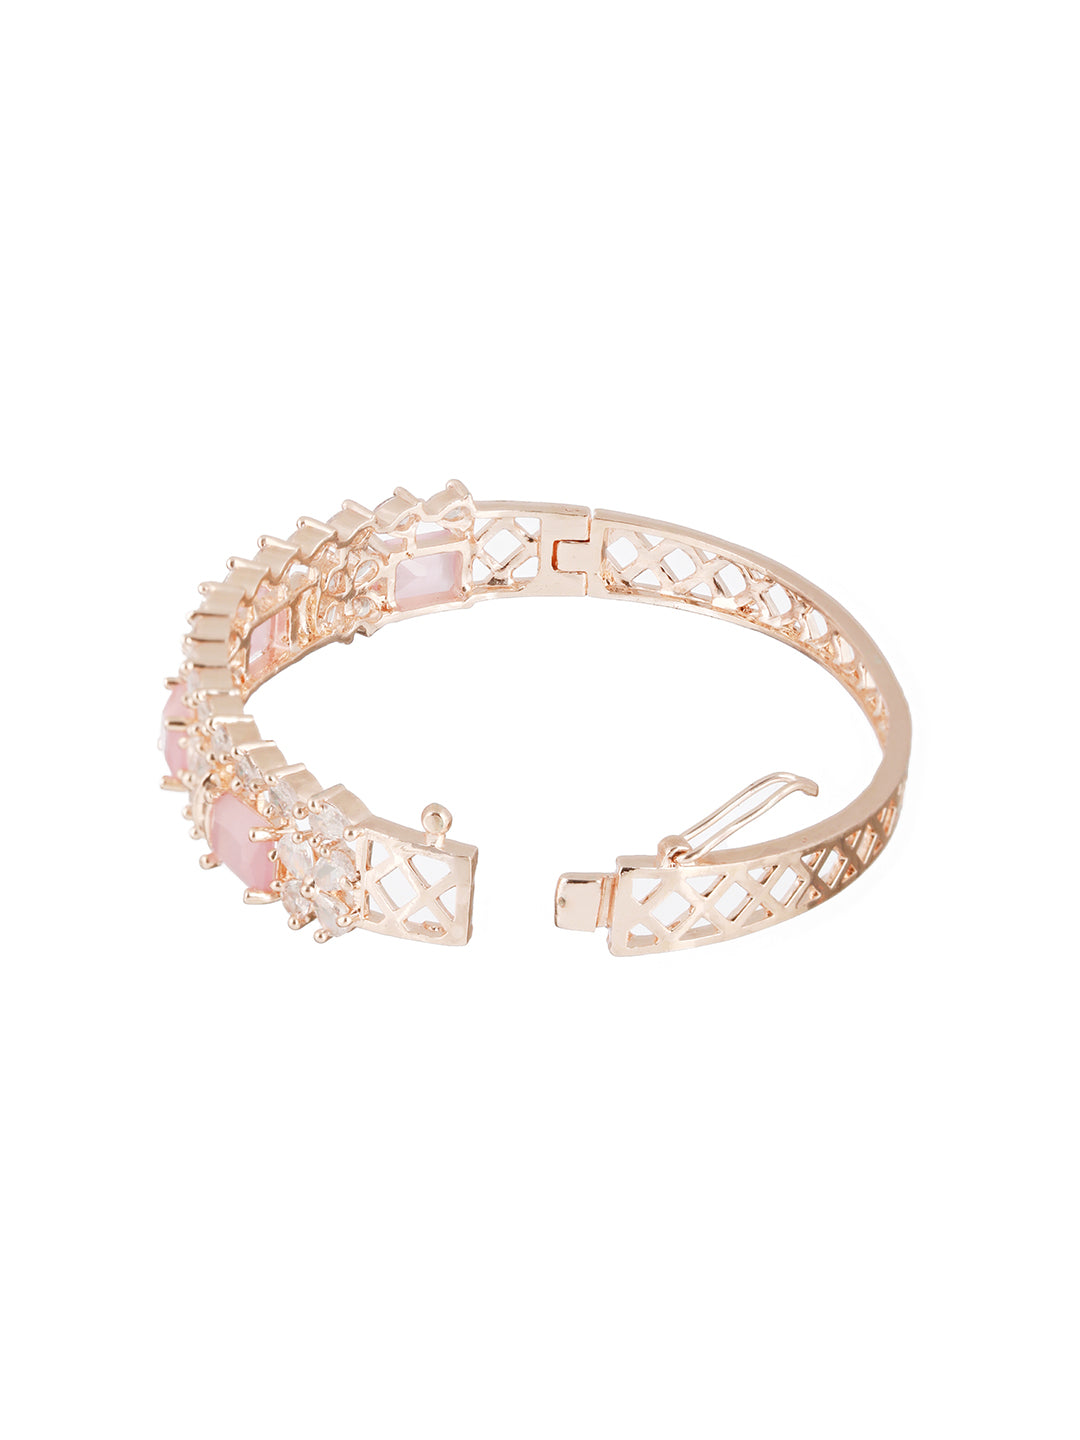 Rose Gold Plated & Pink American Diamond Studded Bangle Style Bracelet